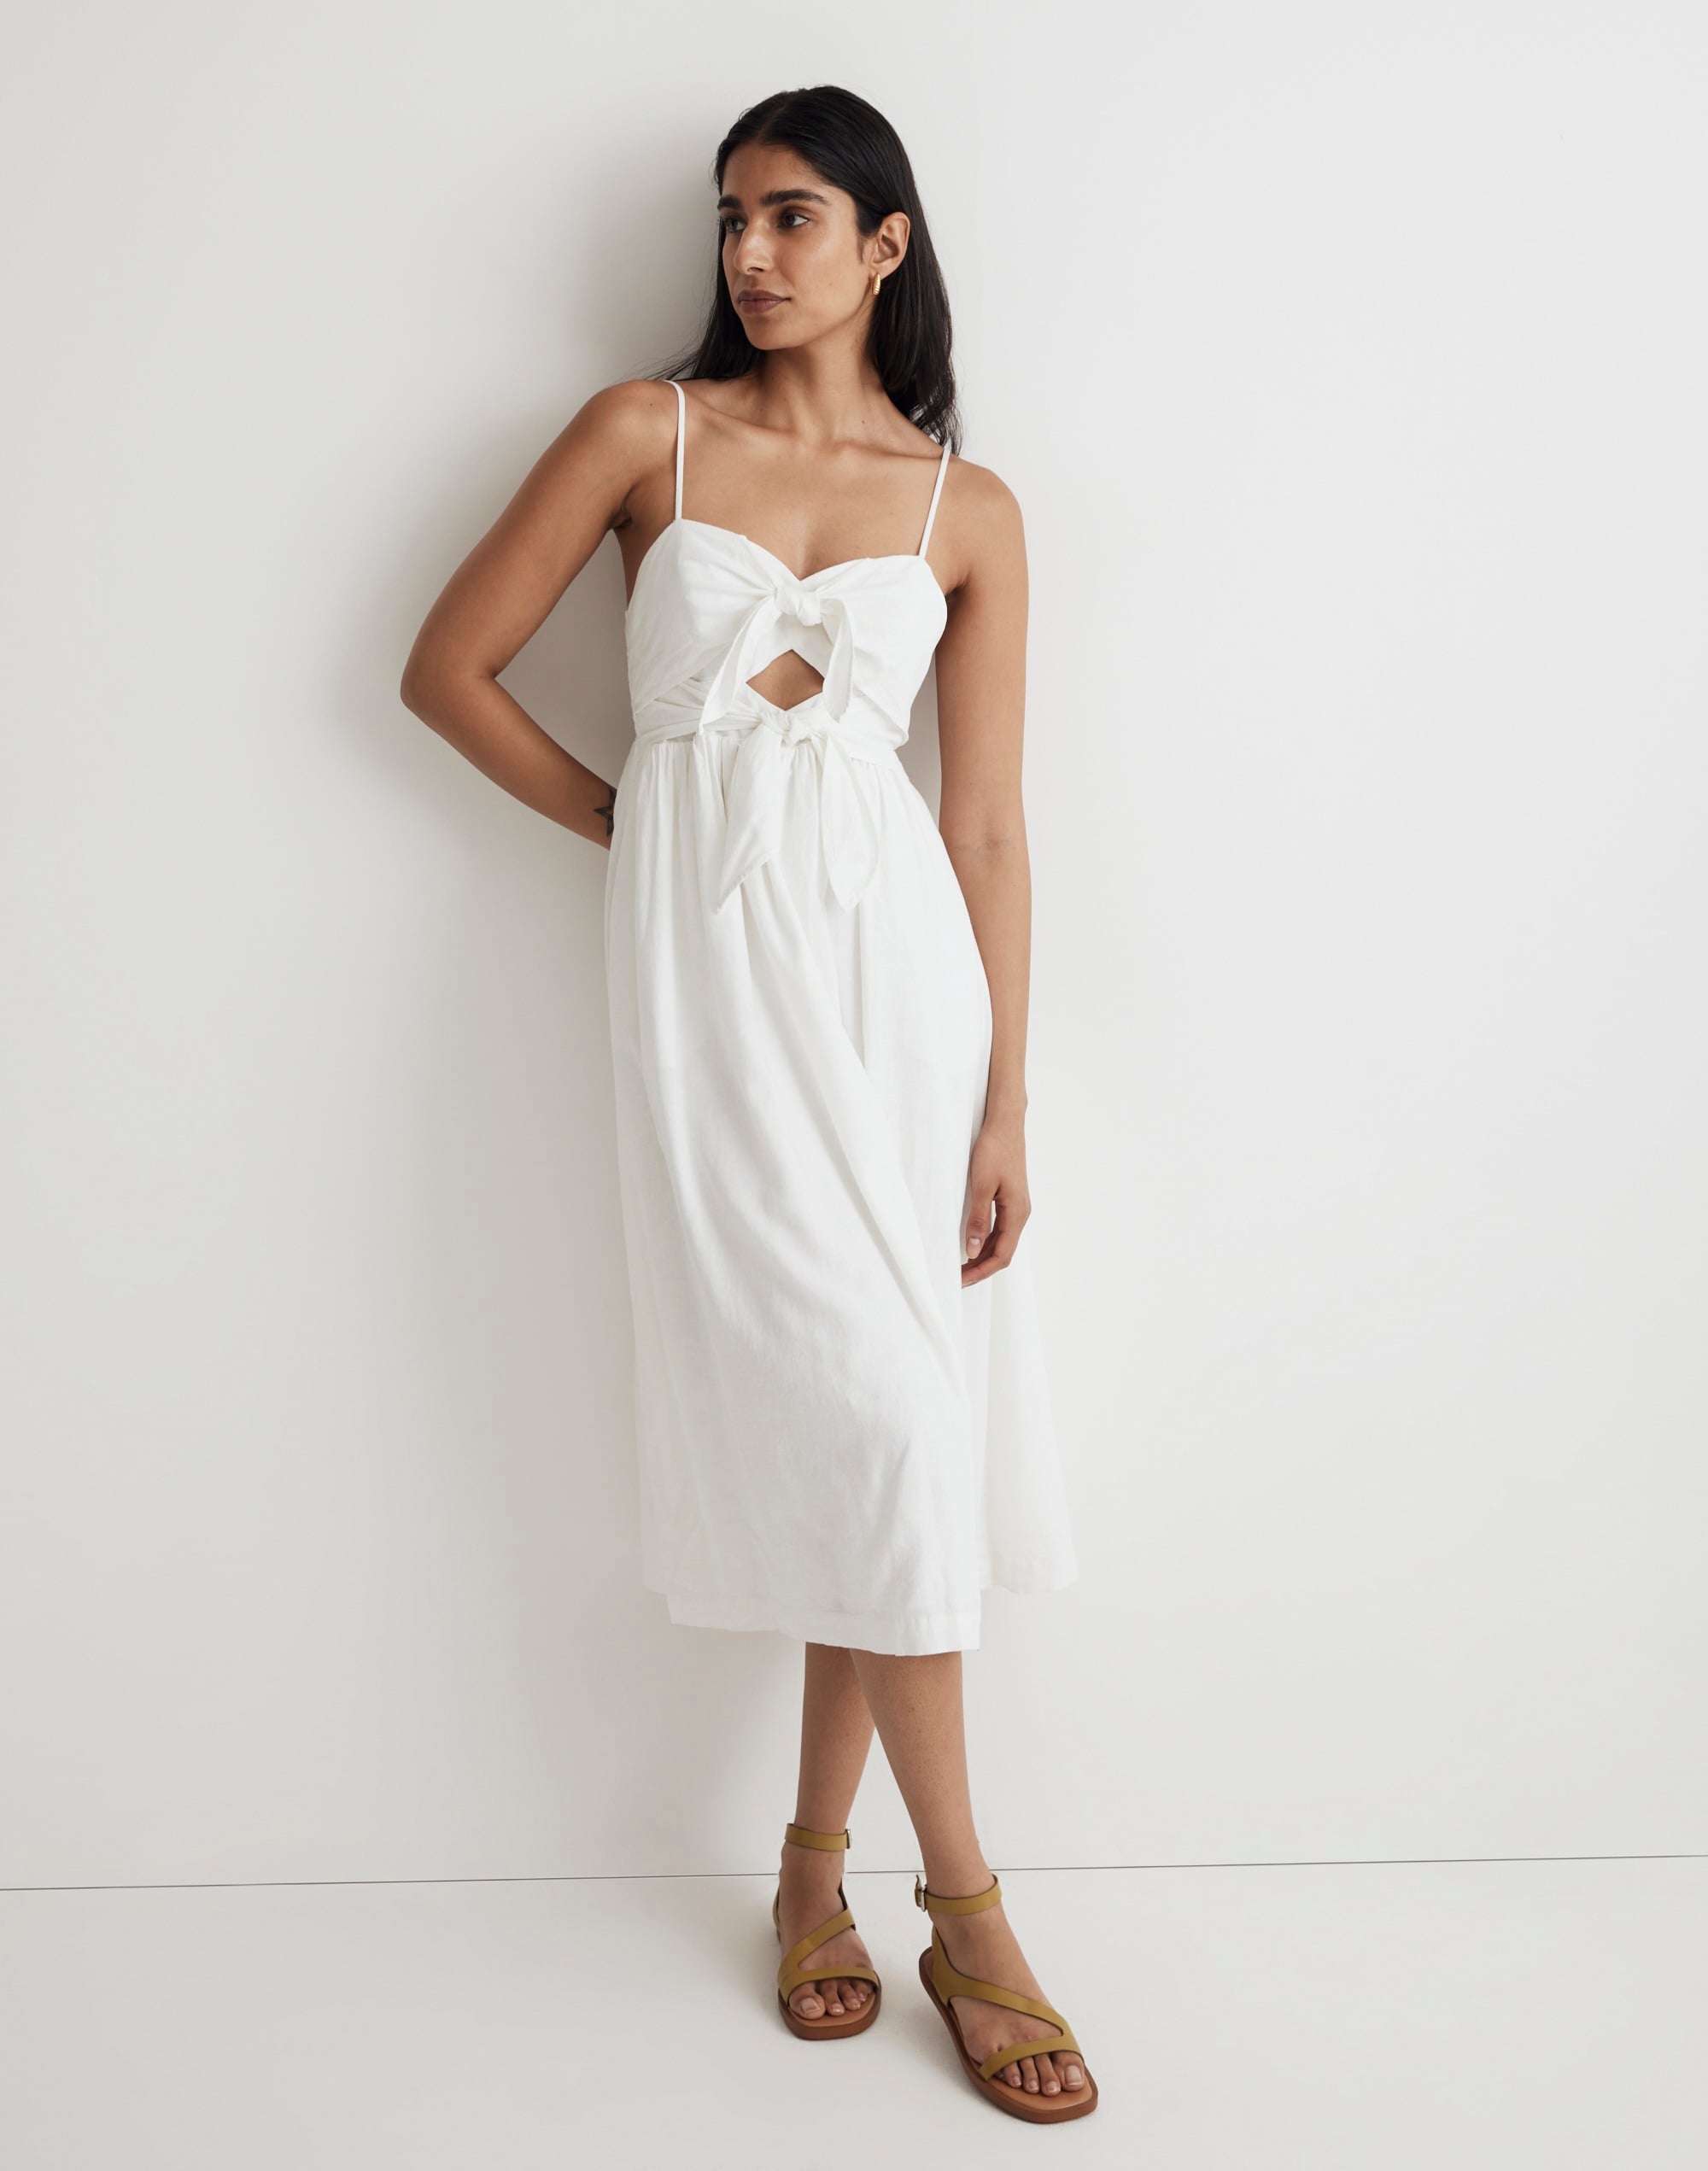 madewell white dress